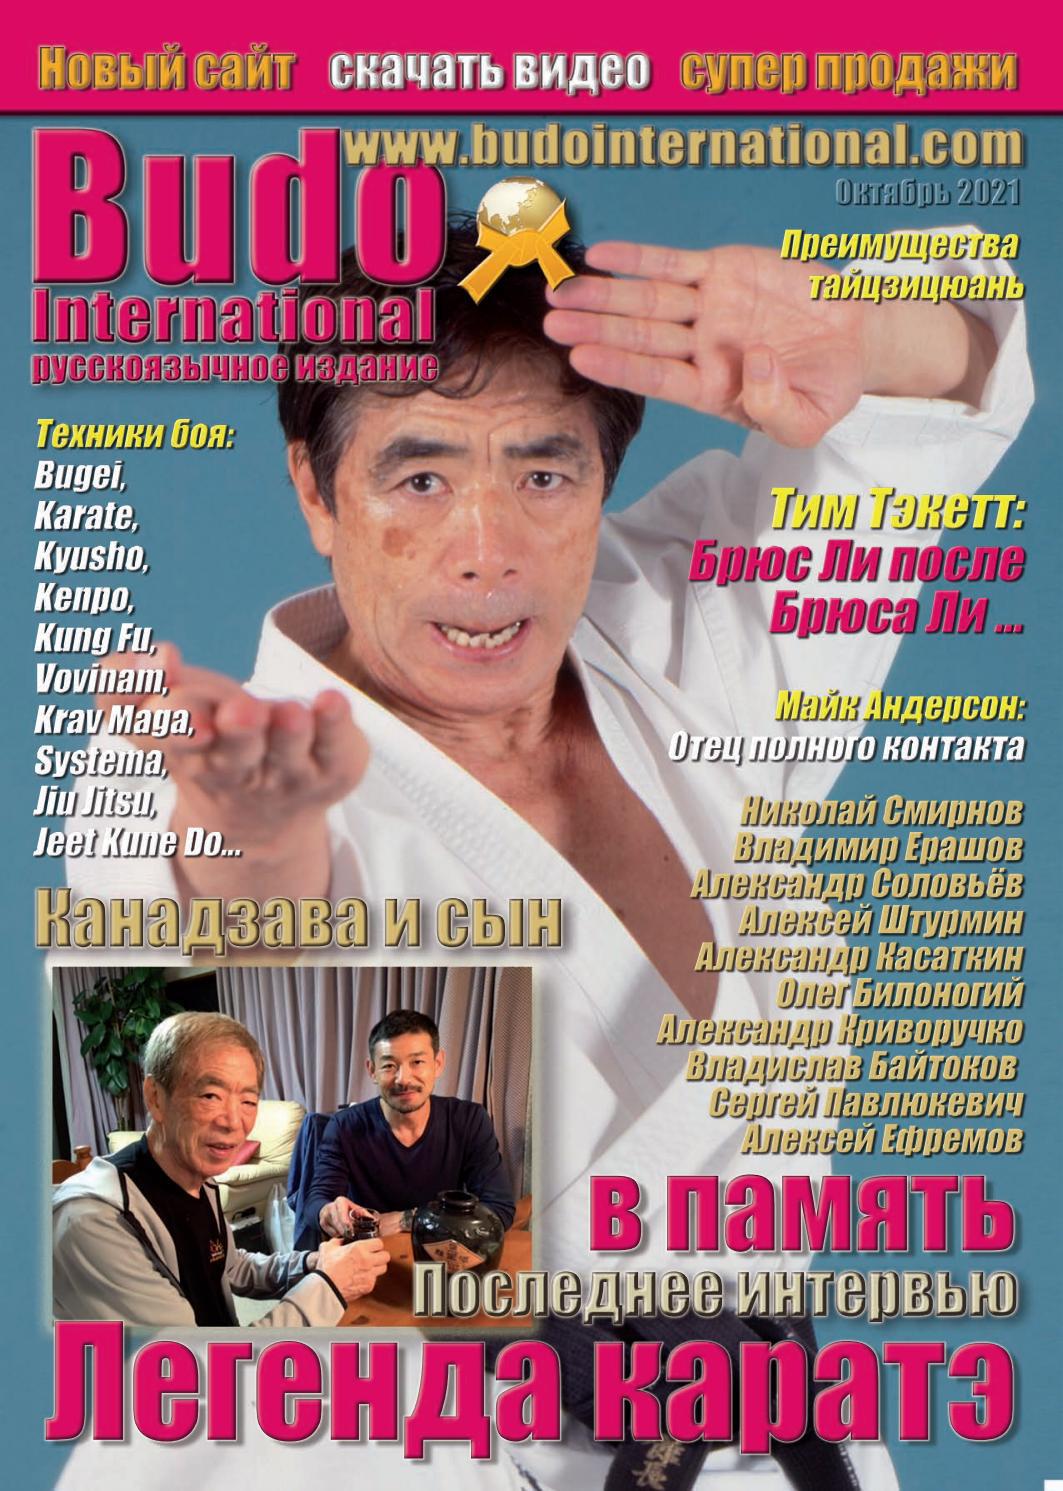 Budo International edition in Russian language 11